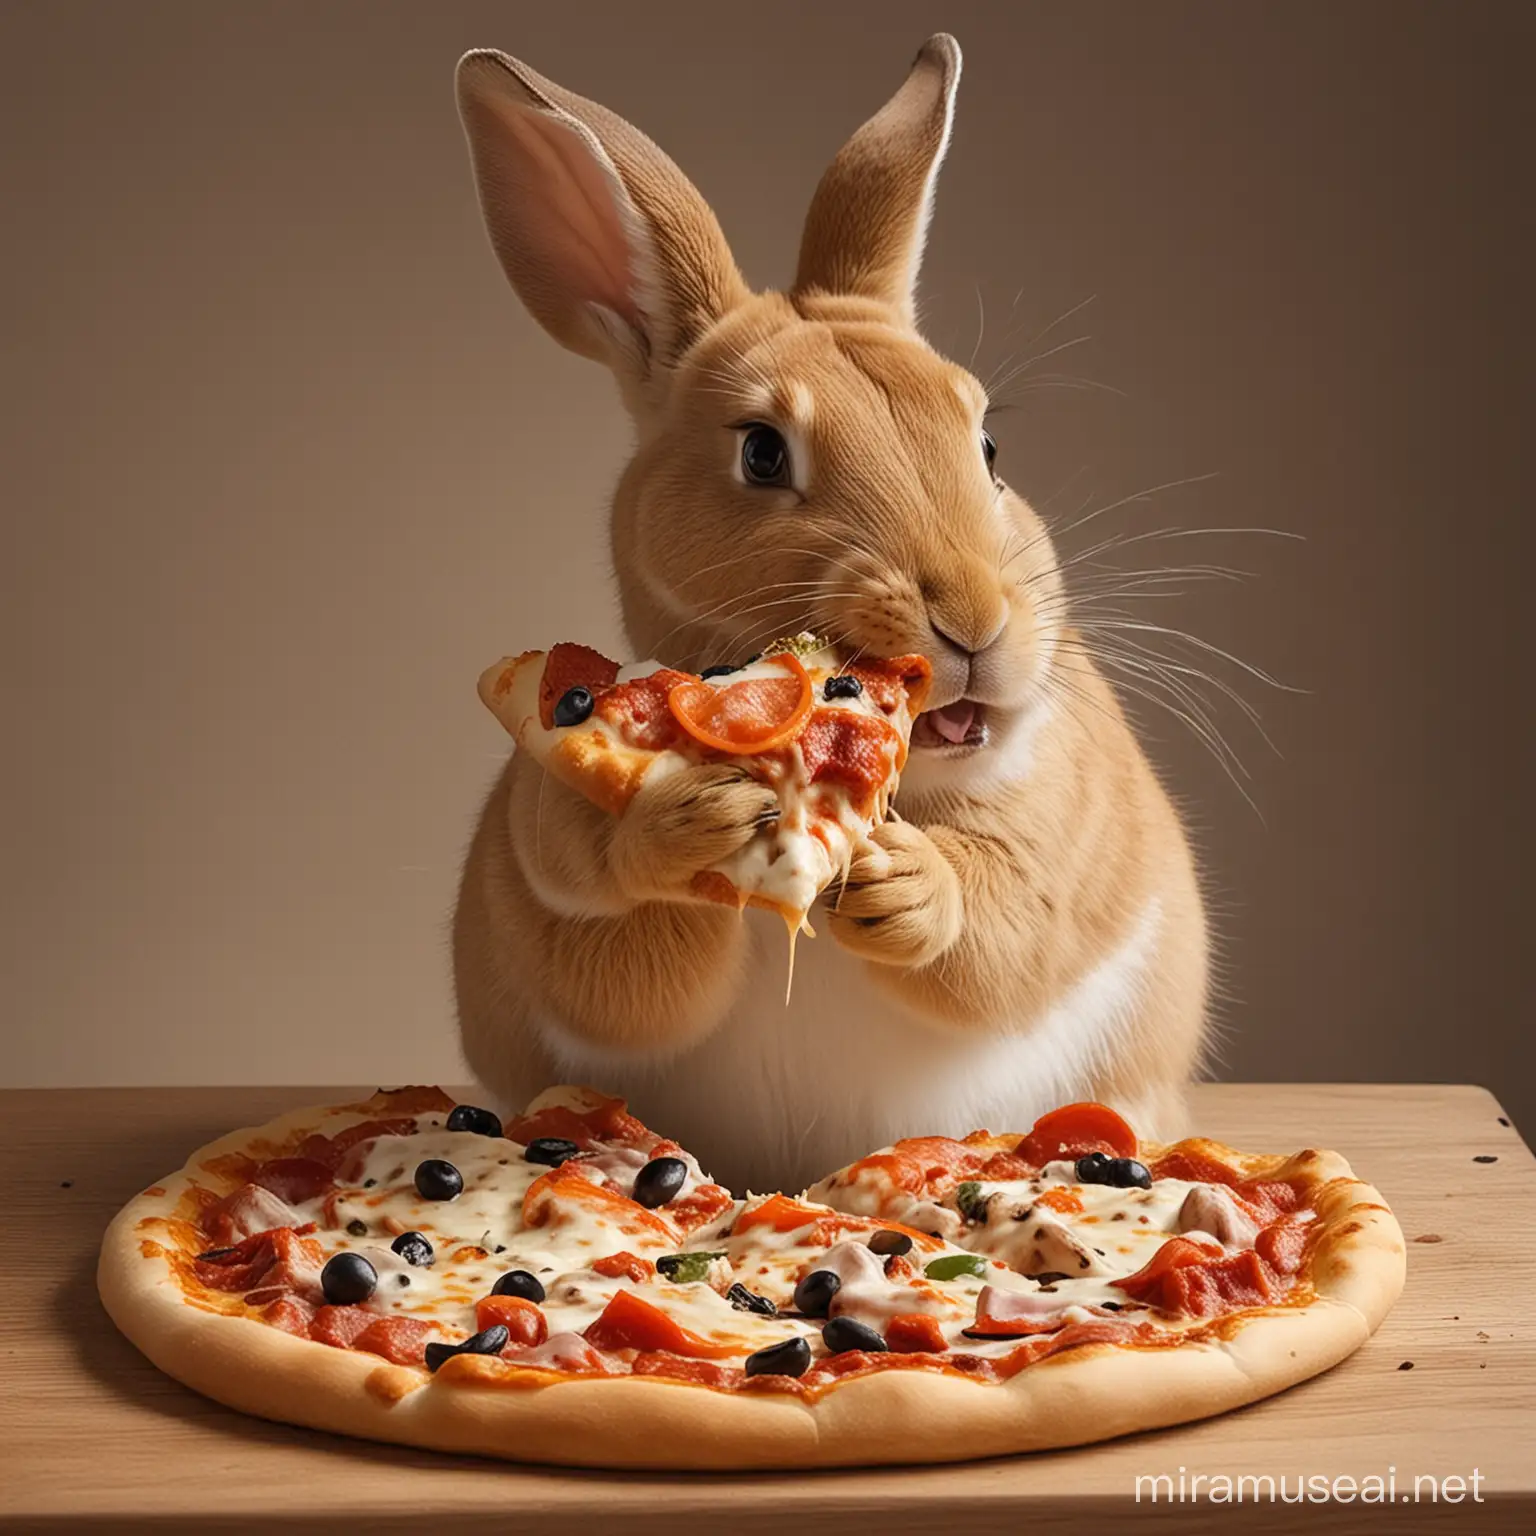 coelho comendo pizza
